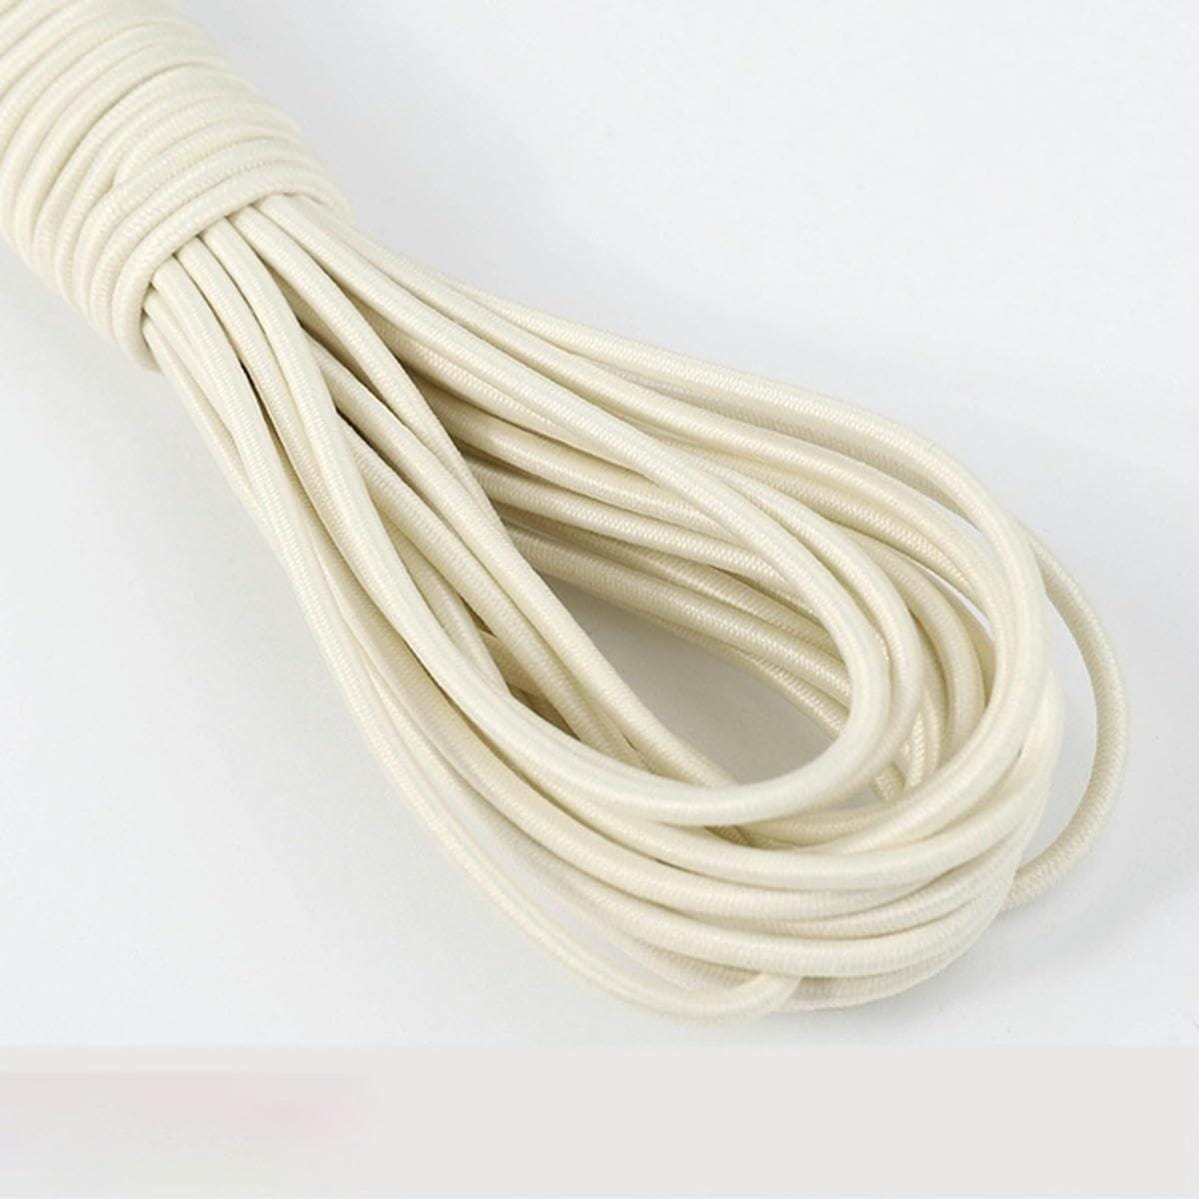 Corda elastica Per molteplici usi - Vendita online su